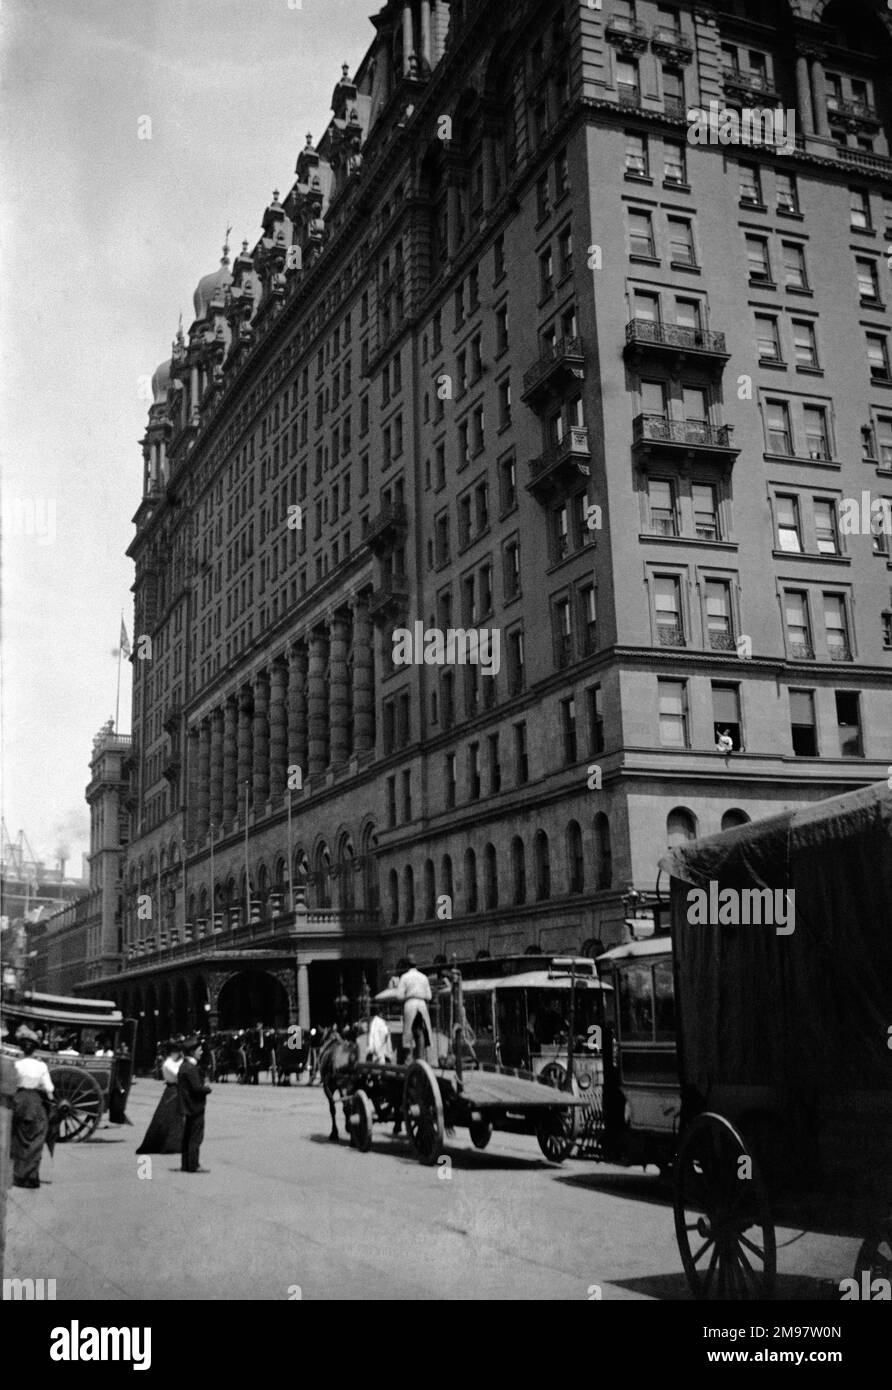 The original Waldorf Astoria was built on 5th avenue, New York